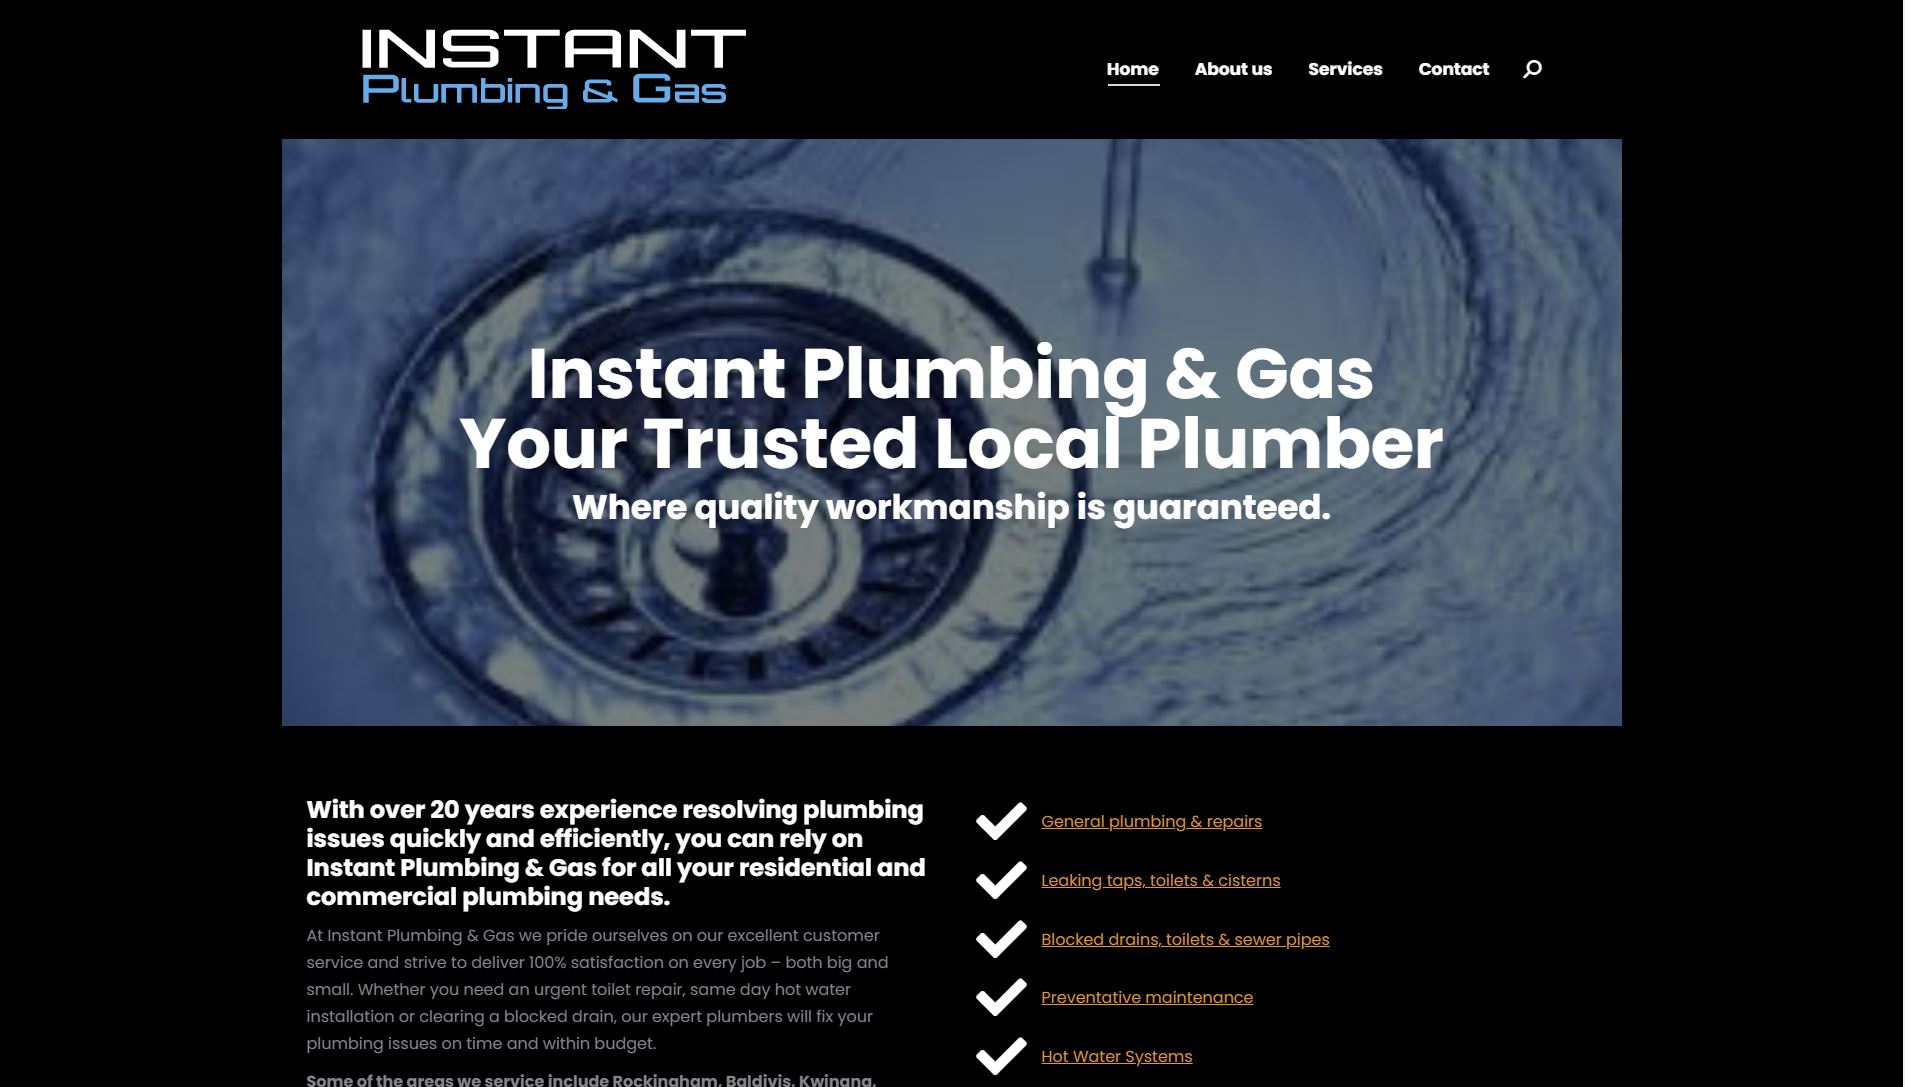 Instant Plumbing & Gas - Rockingham Plumber